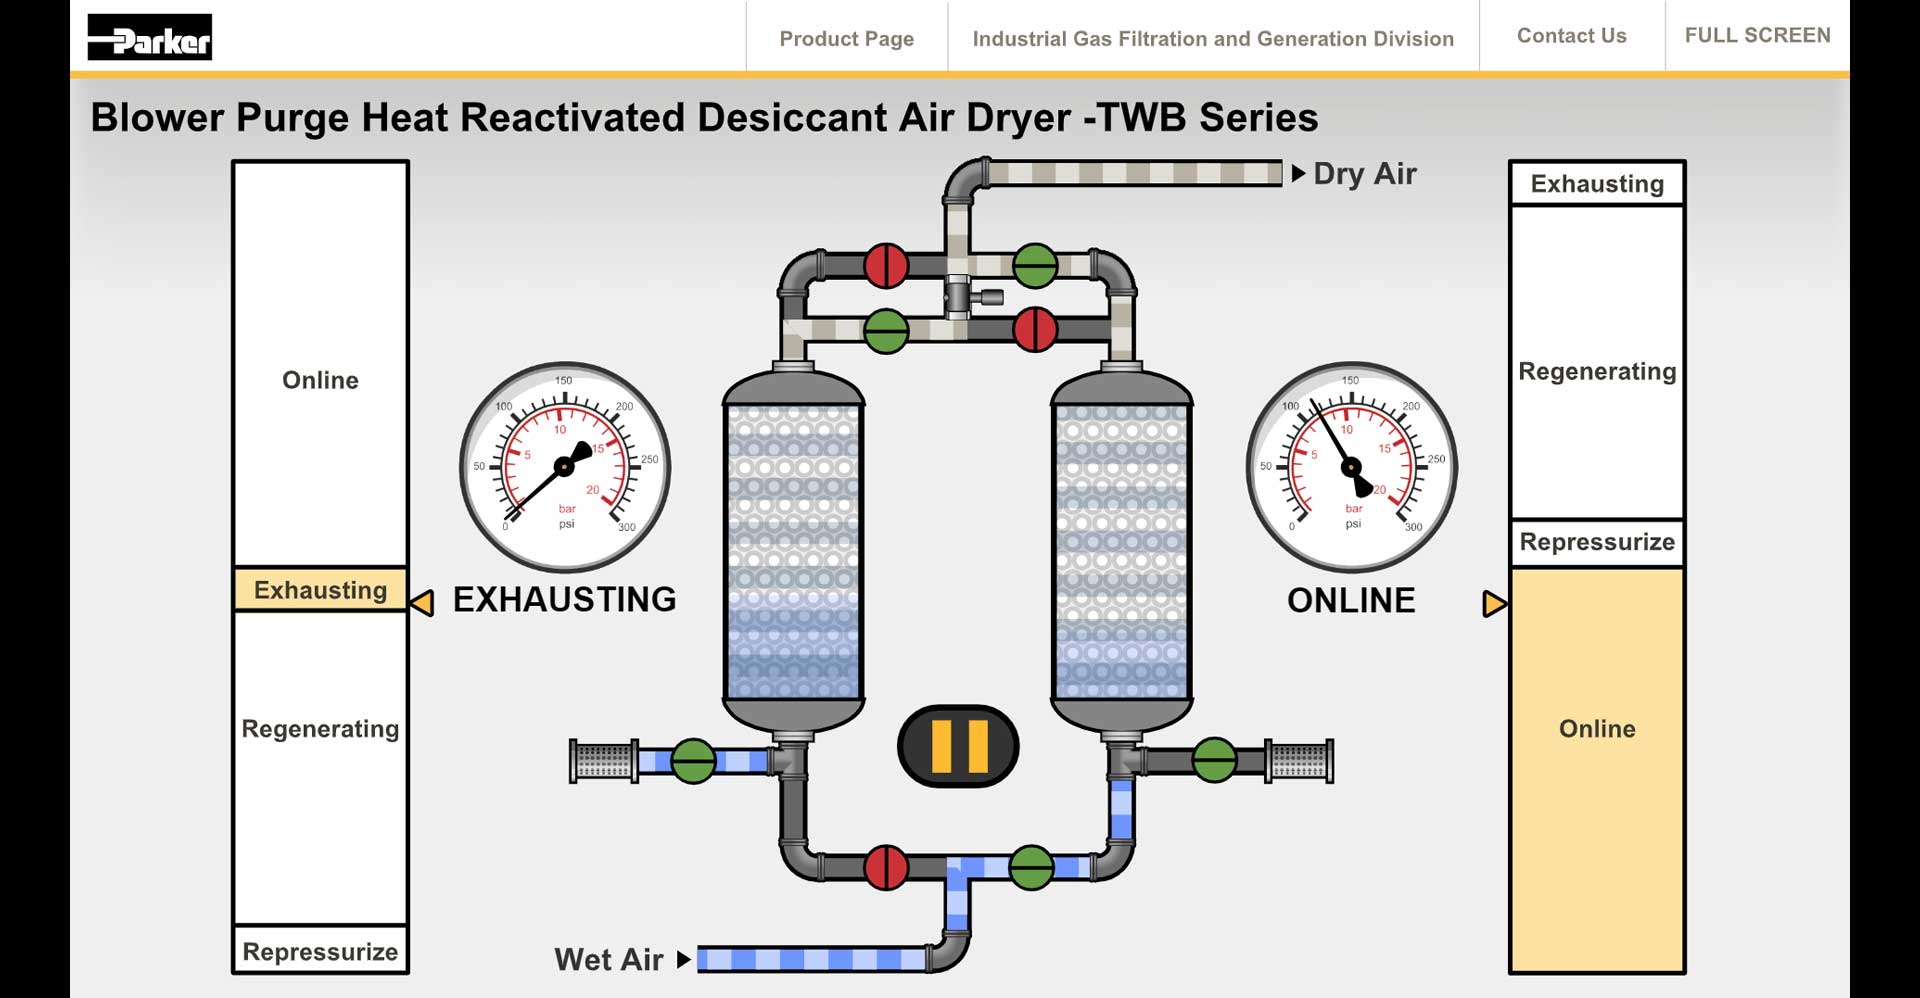 Blower Purge Heat Reactivated Desiccant Air Dryer -TWB Series